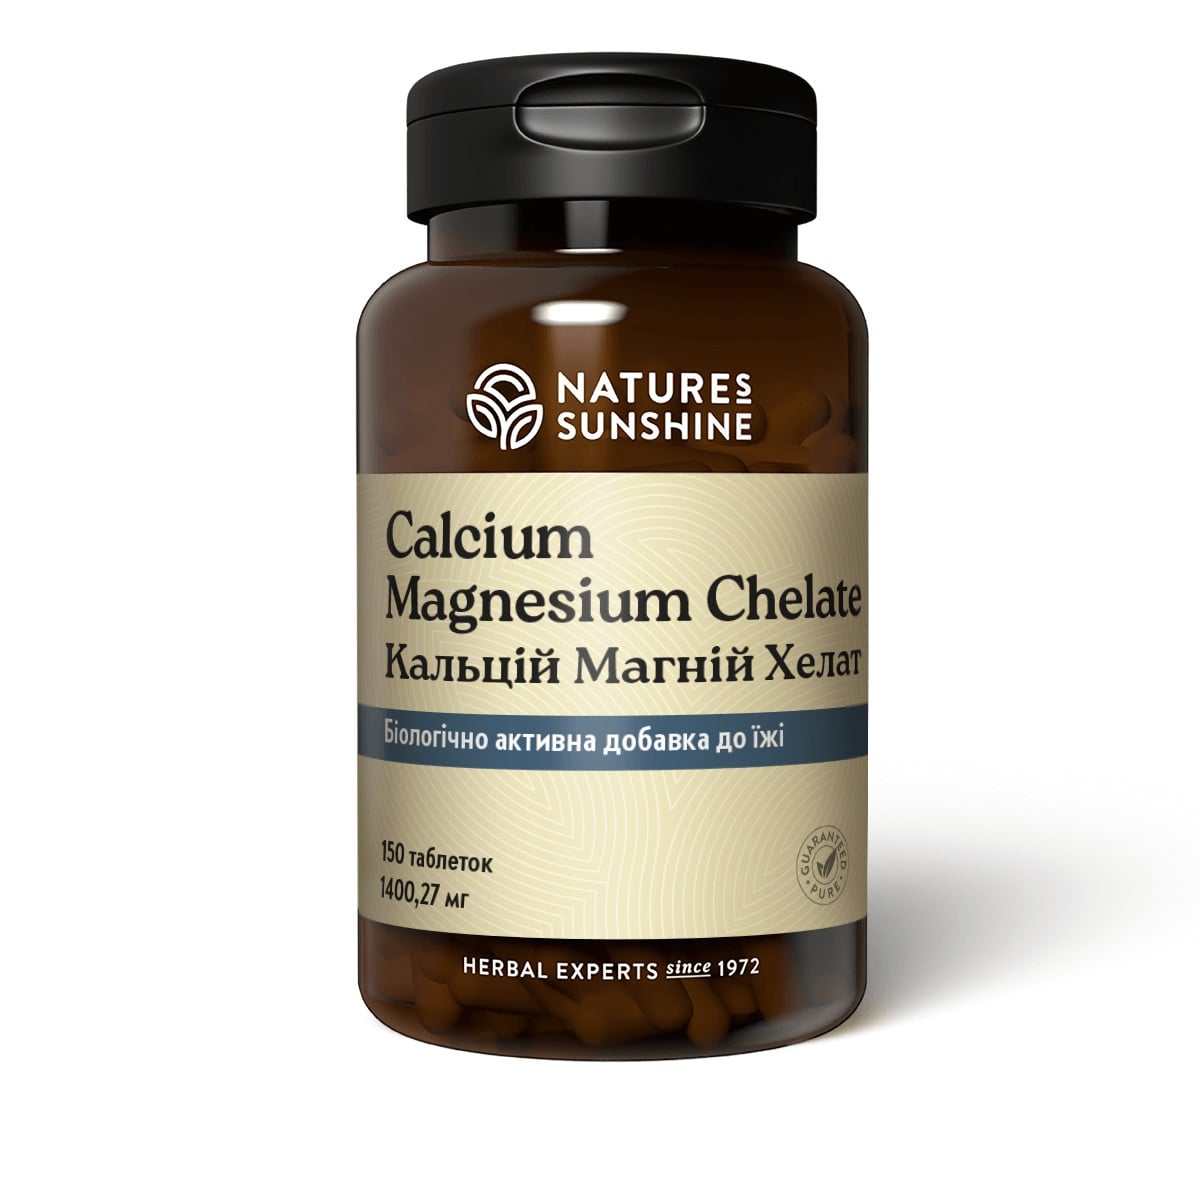 Calcium Magnesium Chelate - Кальций Магний Хелат - БАД Nature's Sunshine Products (NSP)